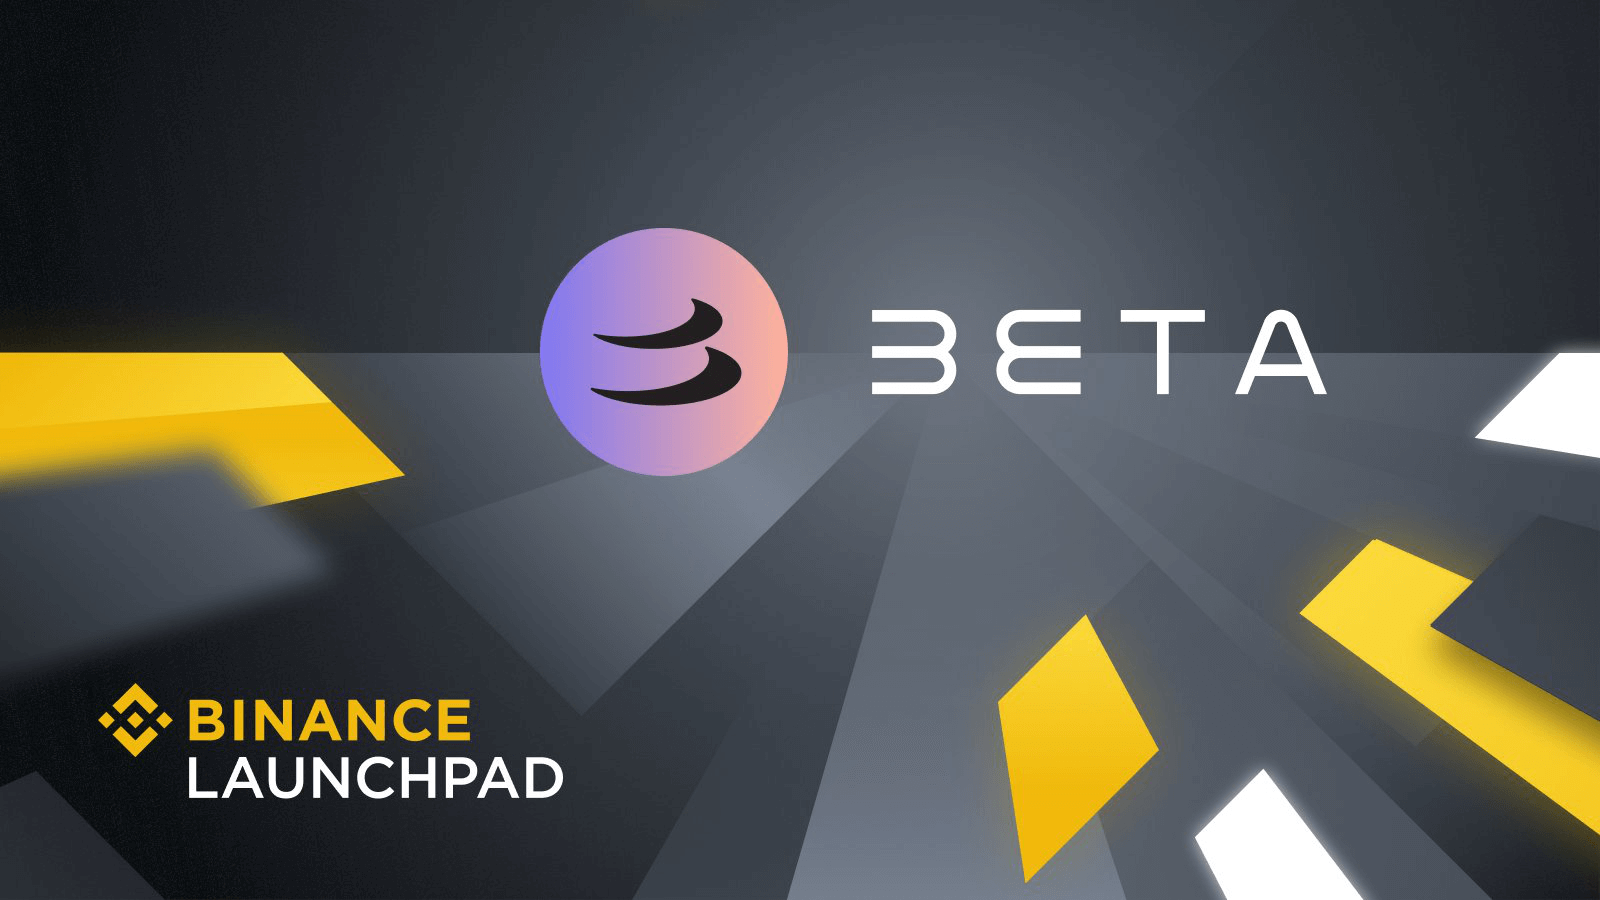 ieo beta finance binance launchpad 1